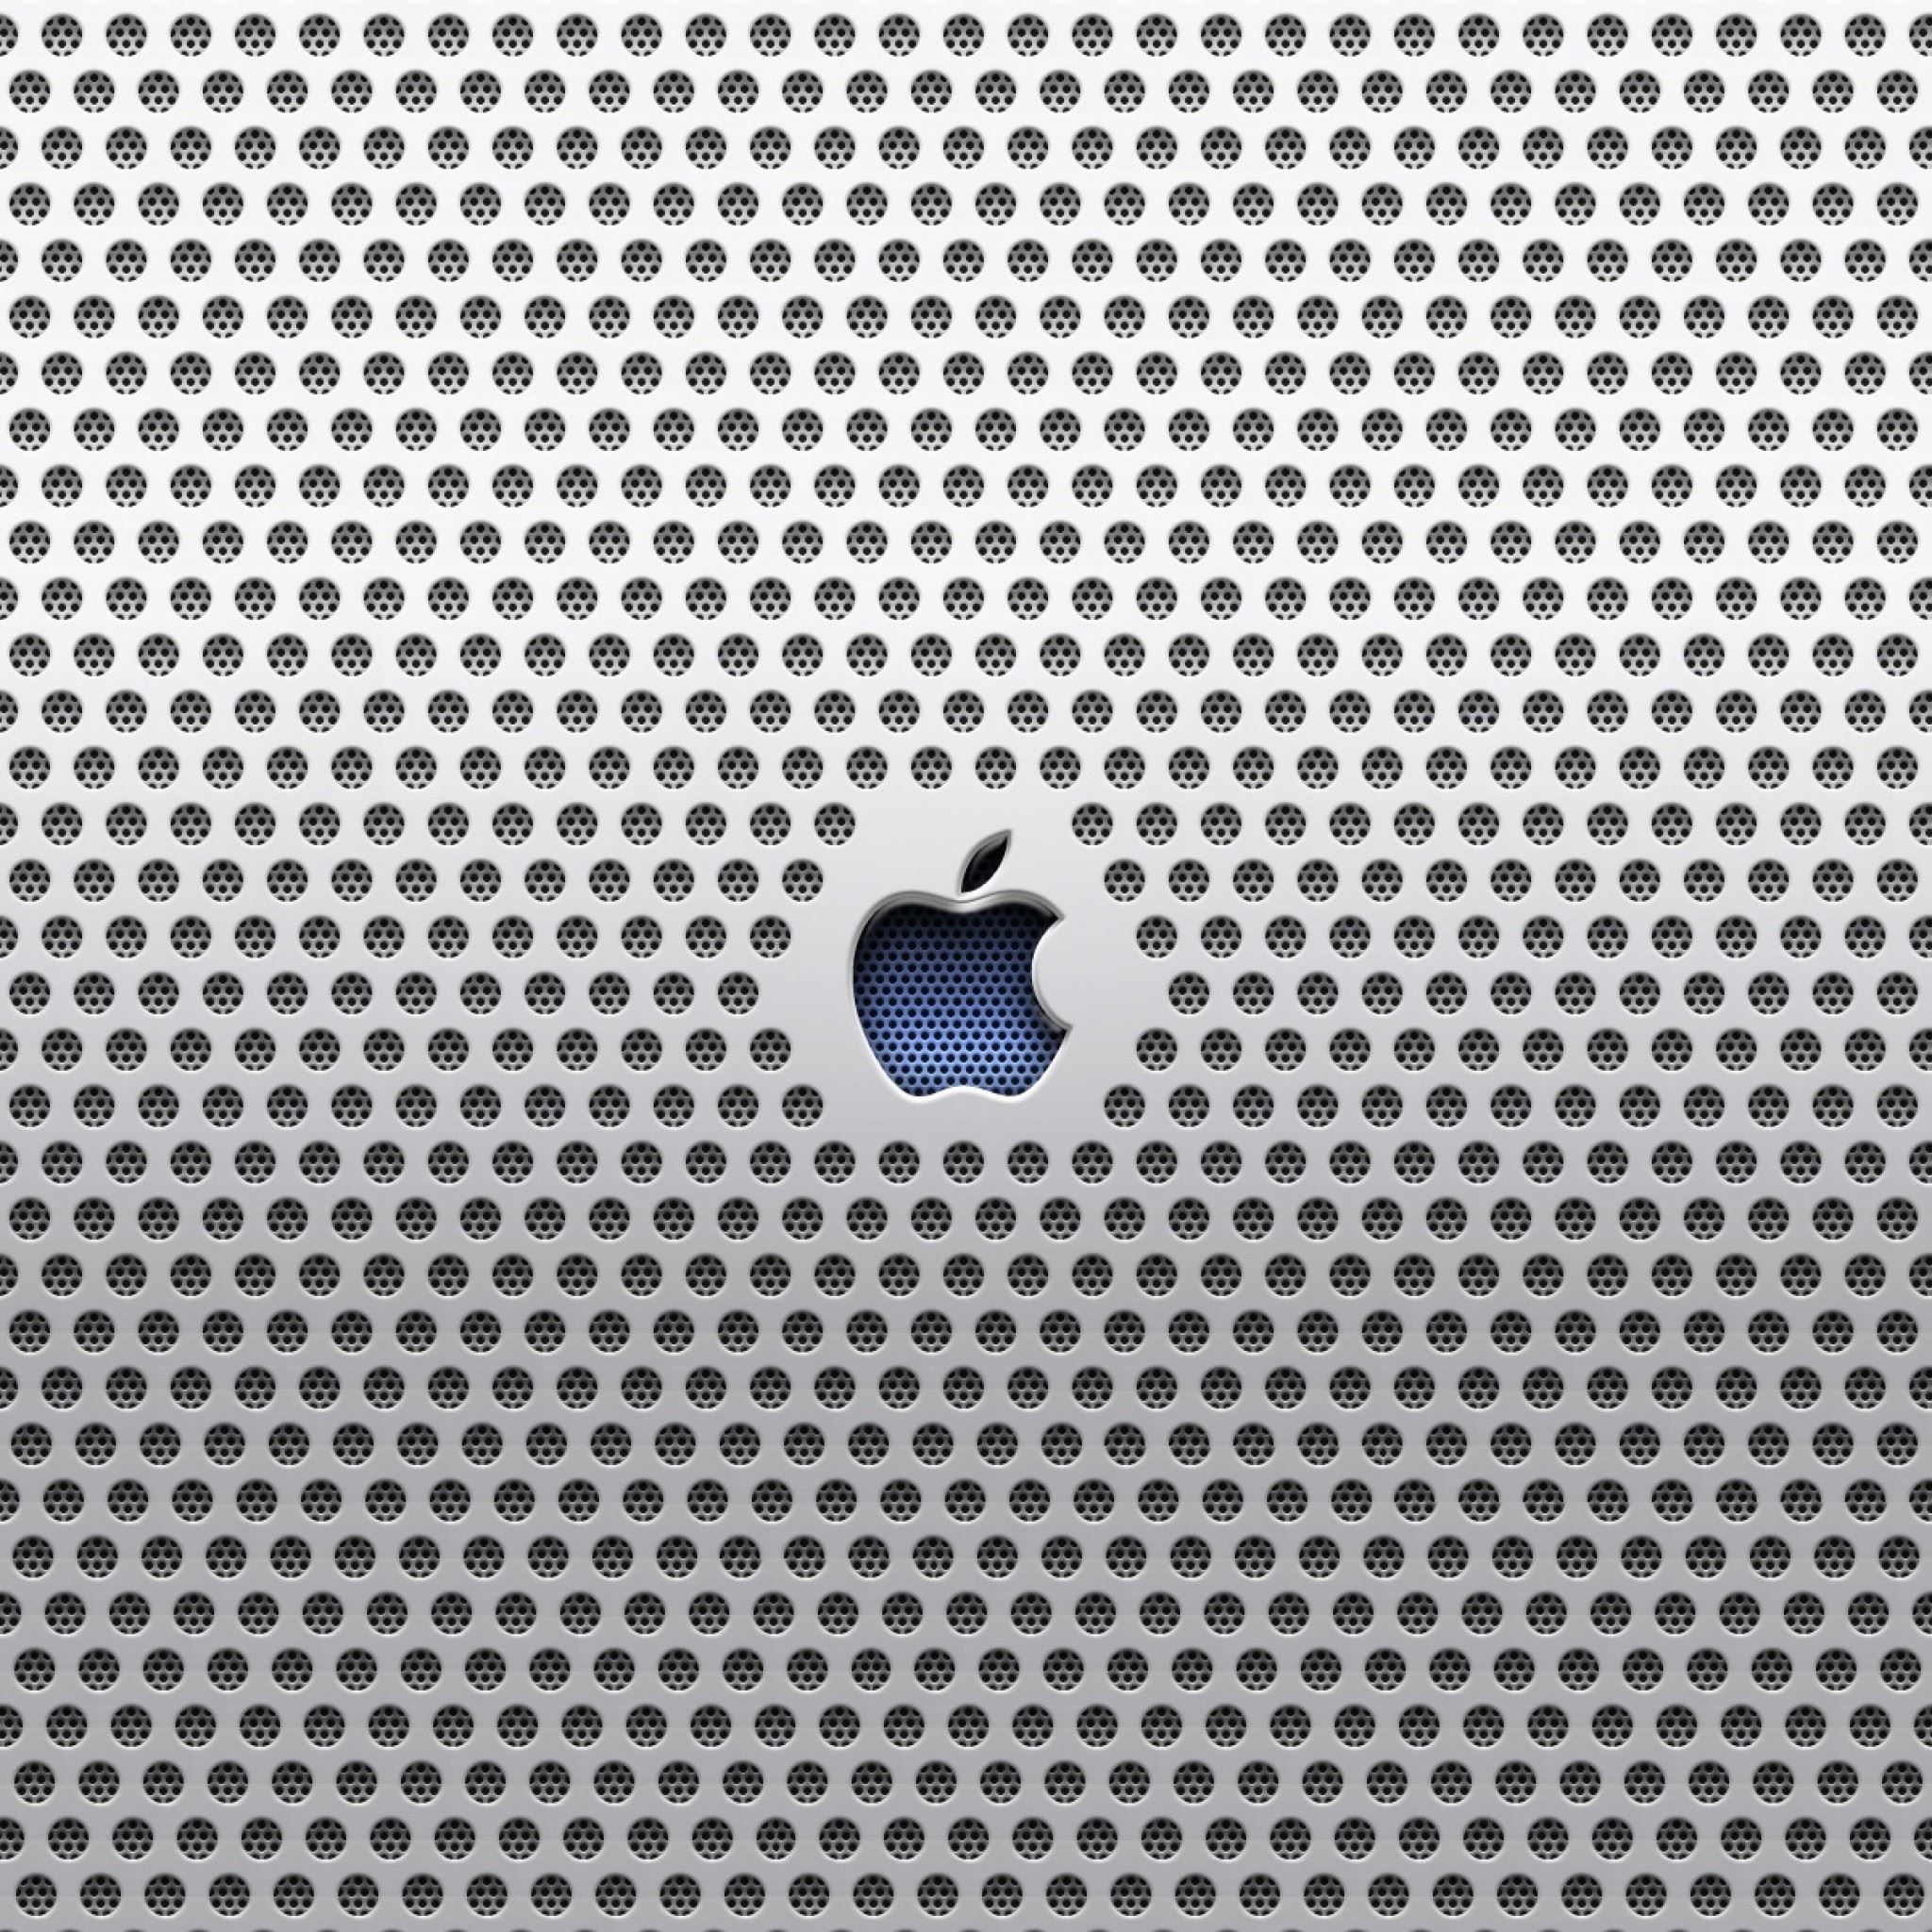 Apple Metal Hd iPad Air wallpaper 